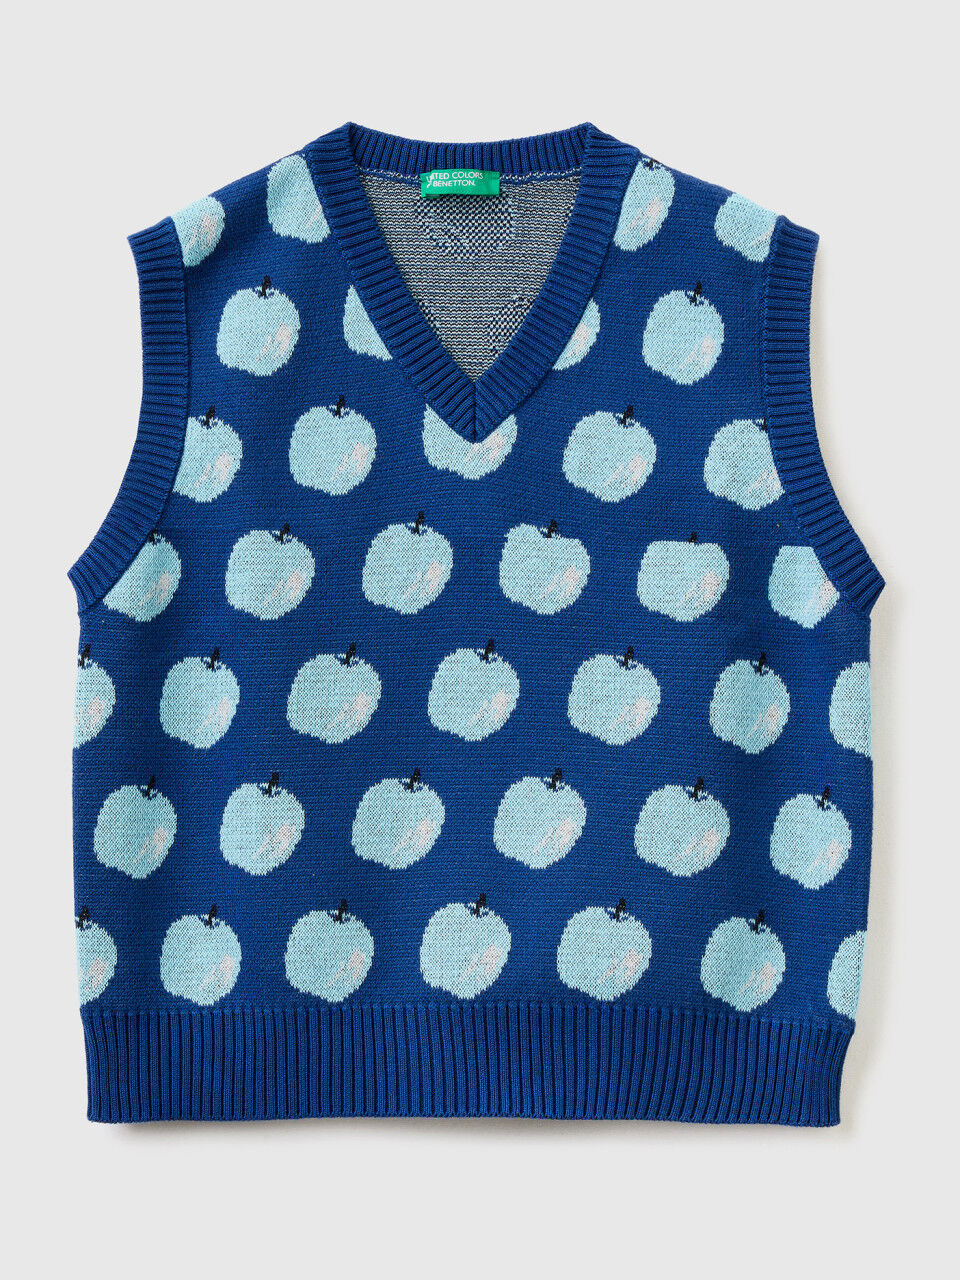 Blue vest with apple pattern